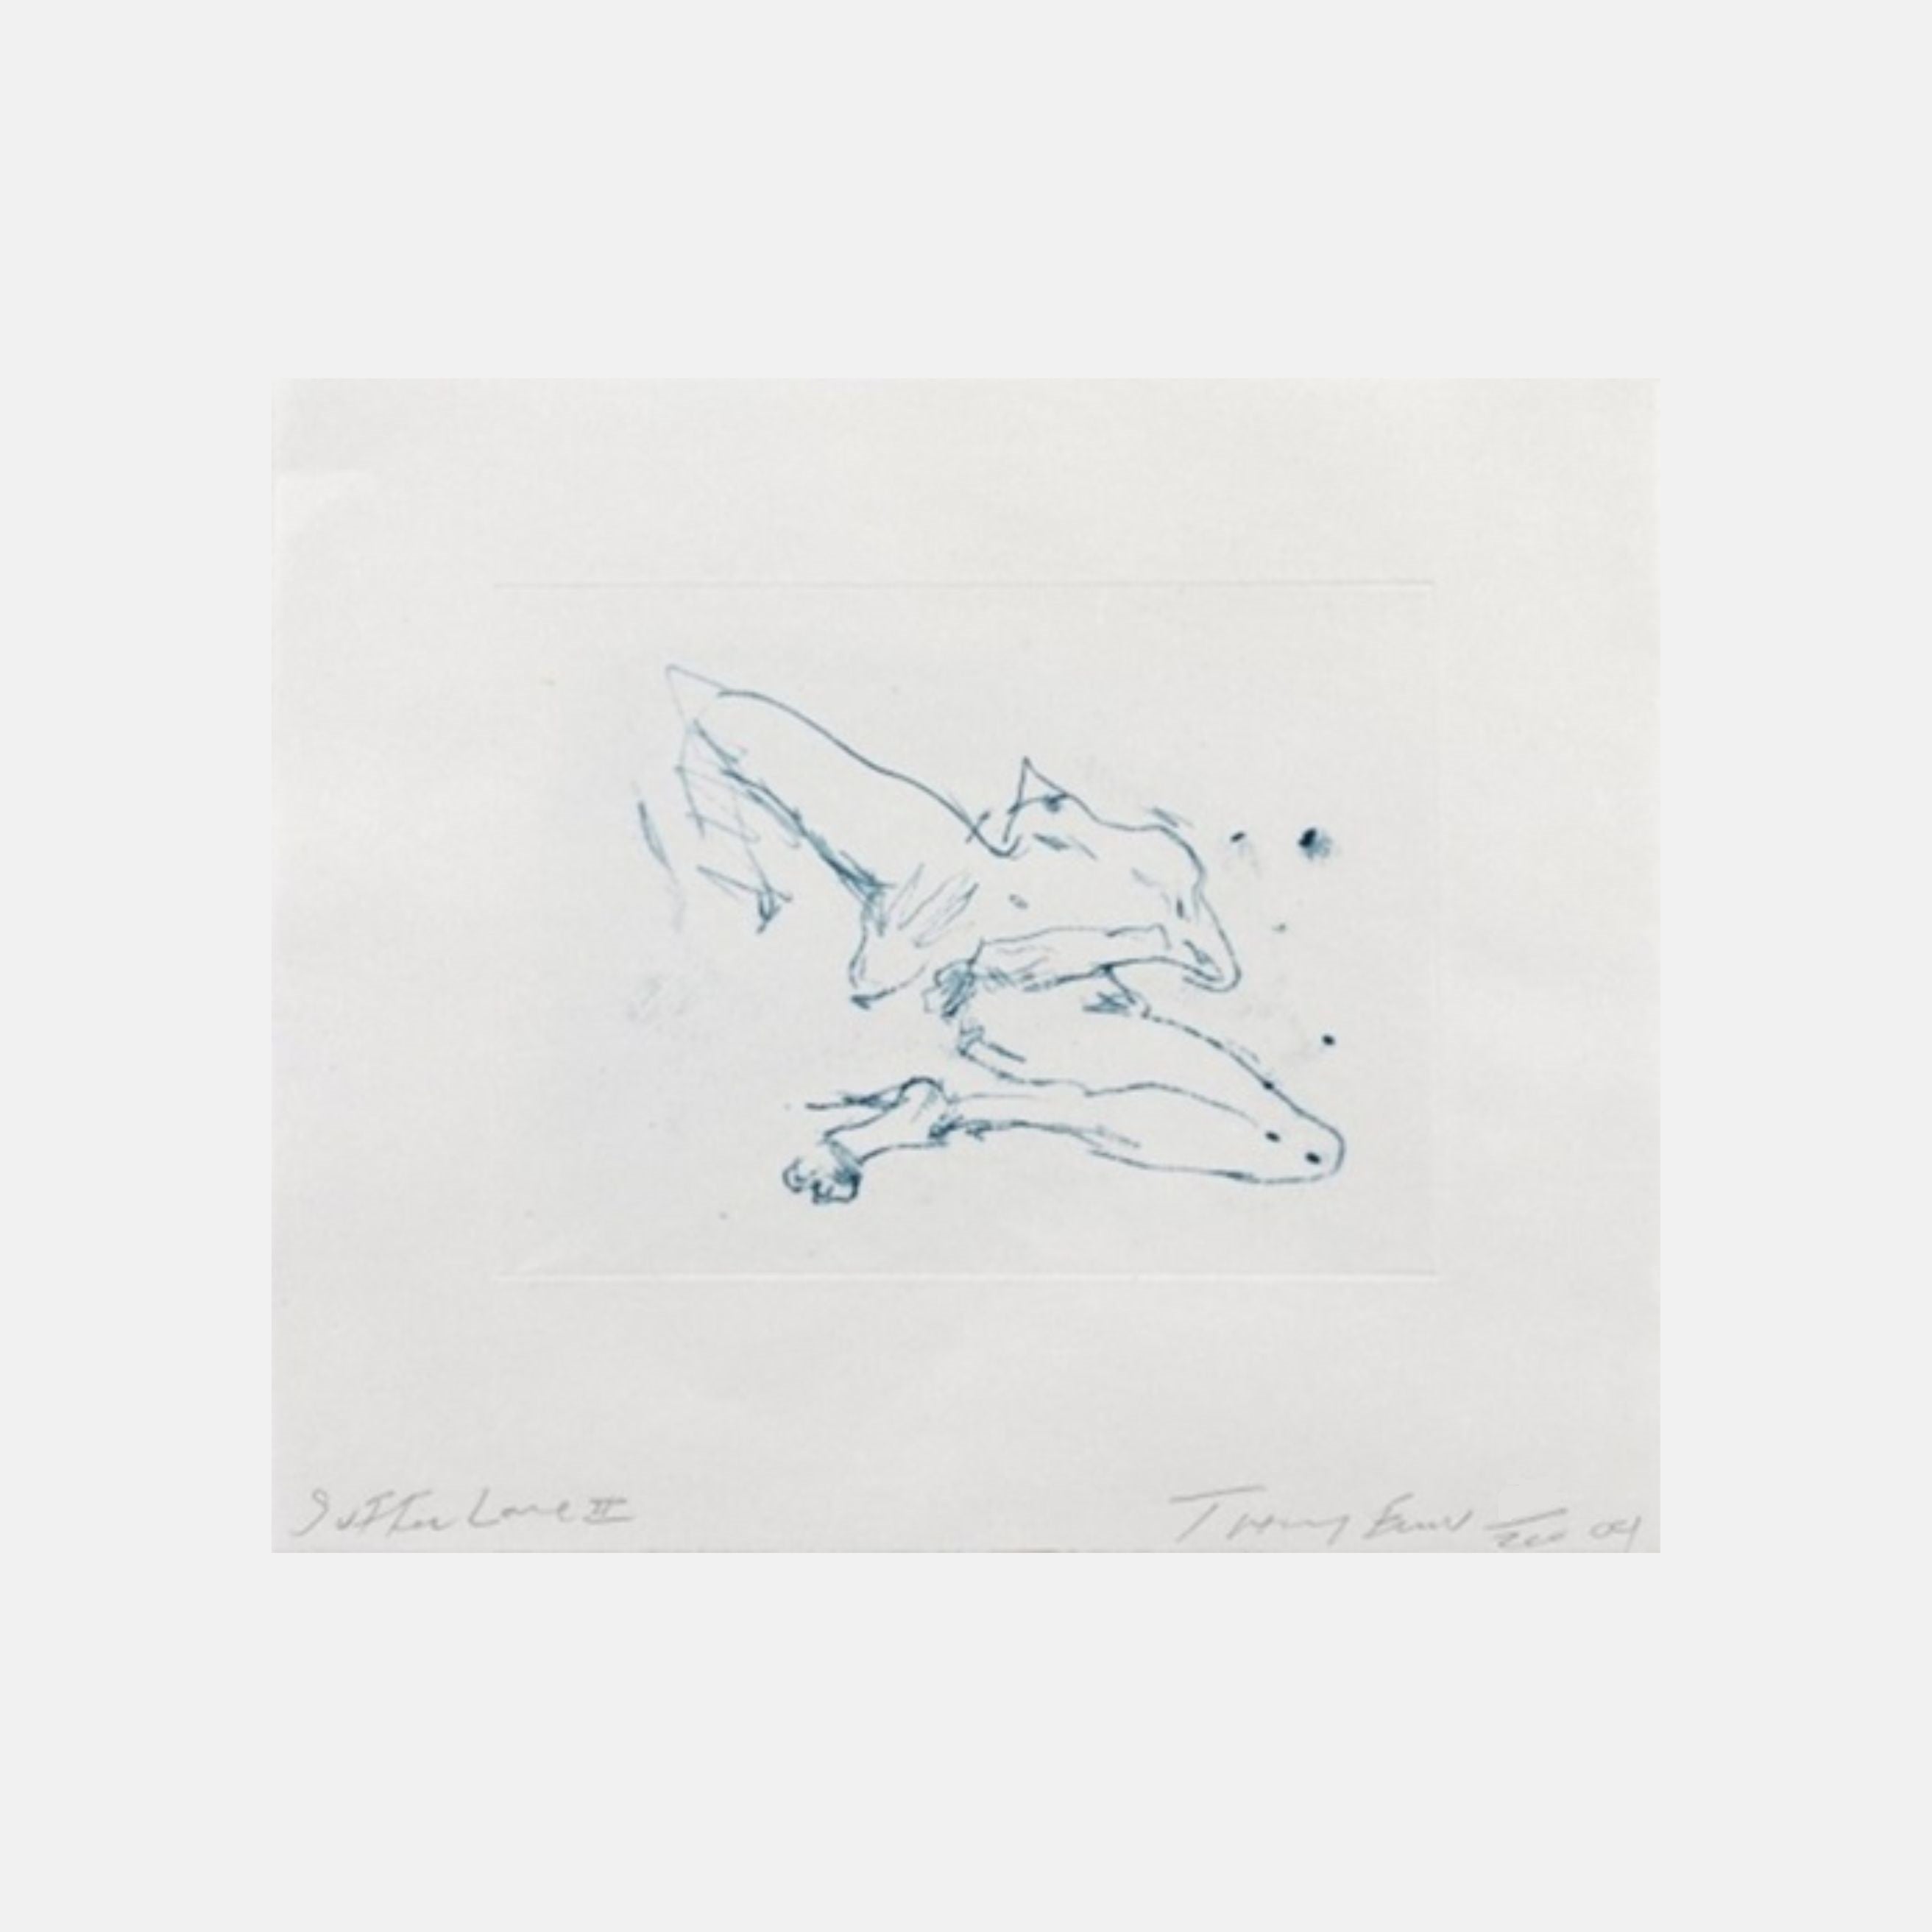 Tracey Emin, Suffer Love II, 2009 For Sale | Lougher Contemporary 